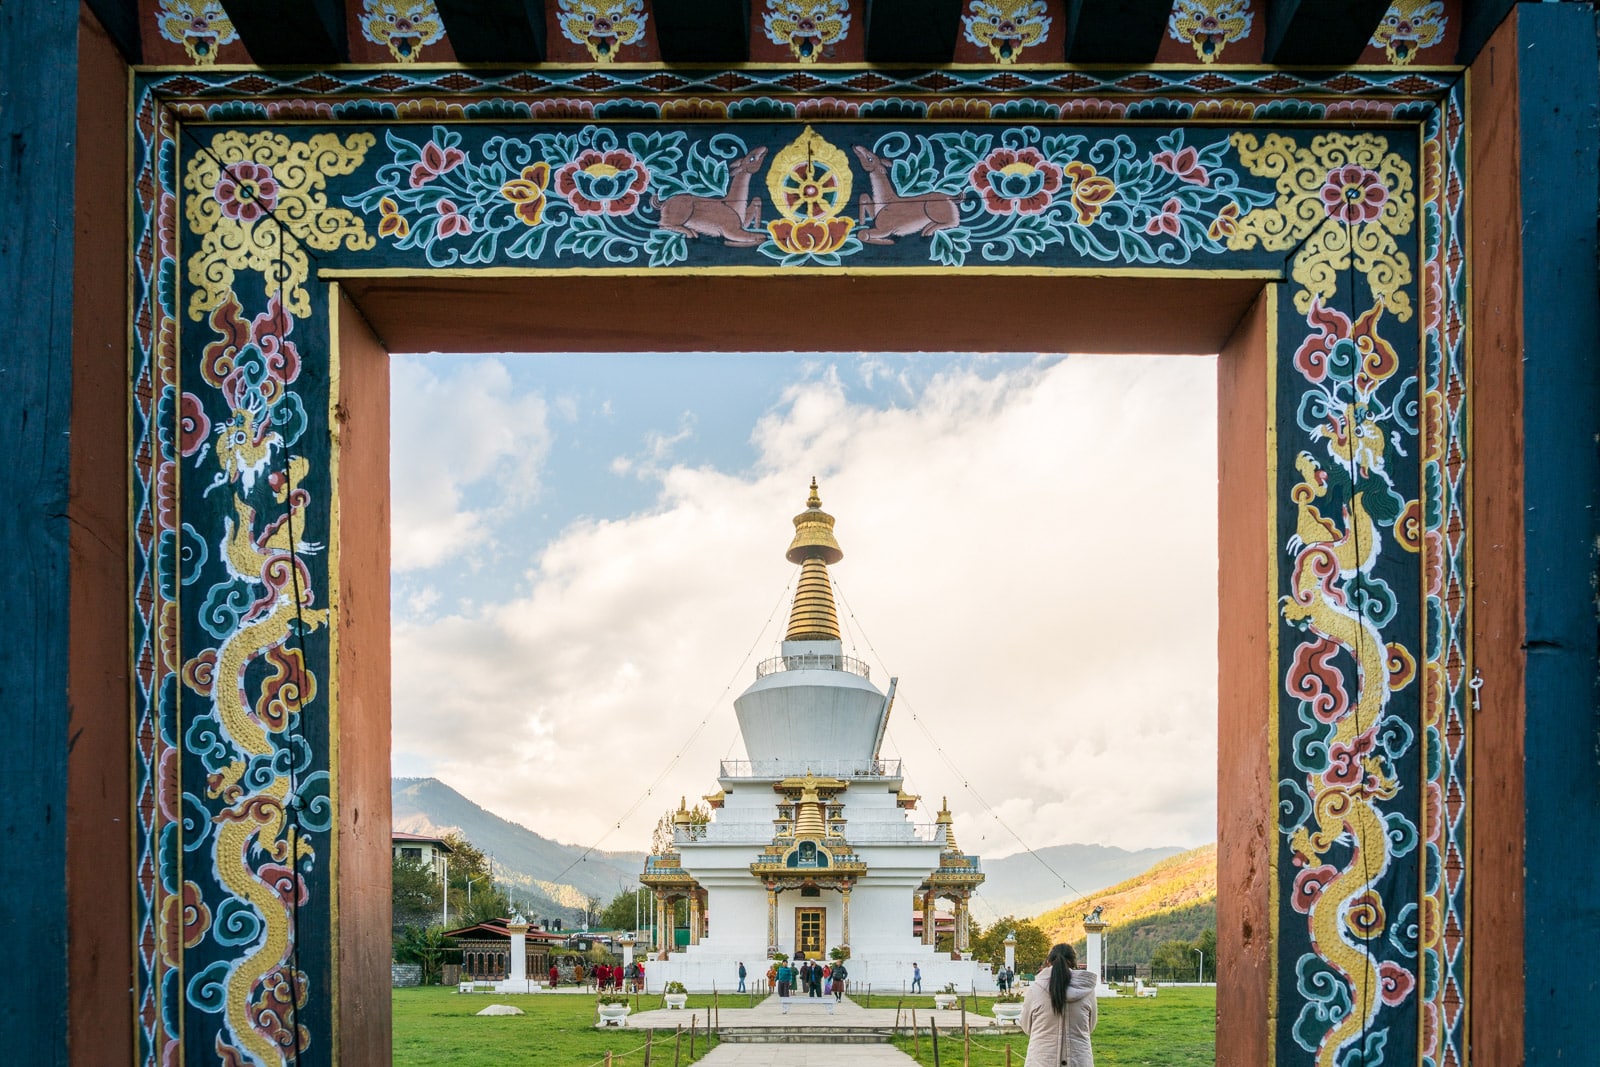 bhutan tourism pics